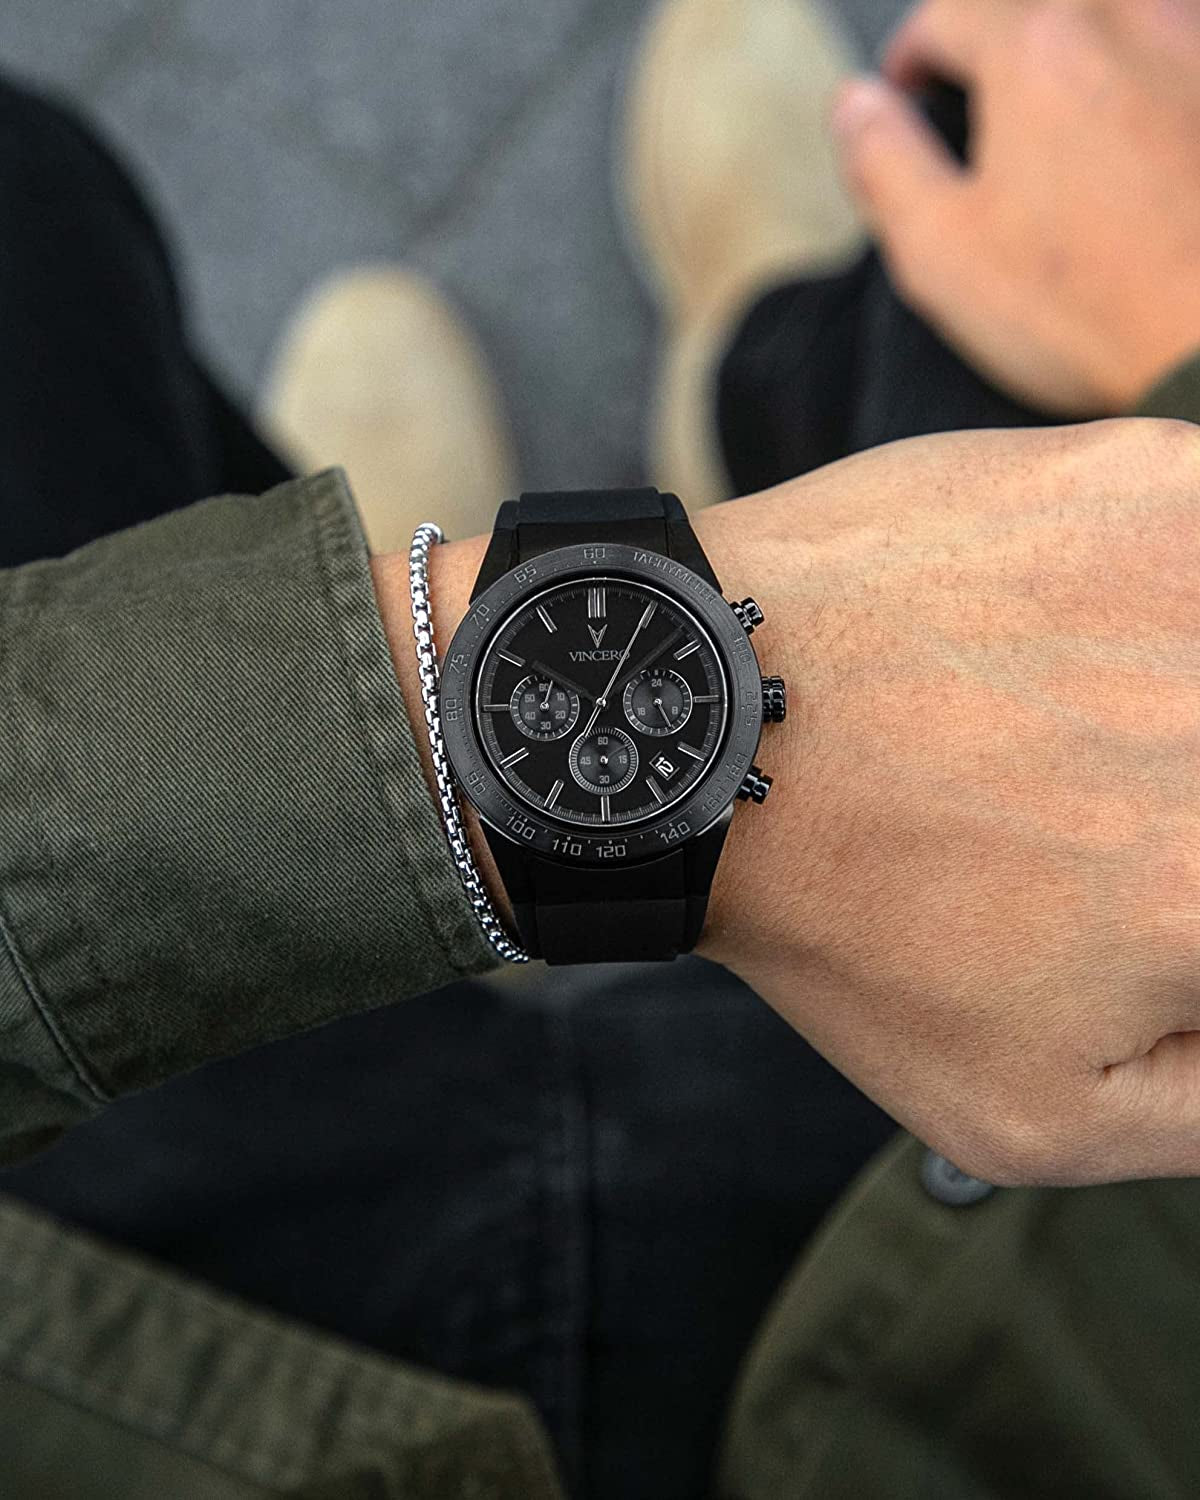 Luxury Men'S Rogue Wrist Watch - Silicone Watch Band - 43Mm Chronograph Watch - Japanese Quartz Movement